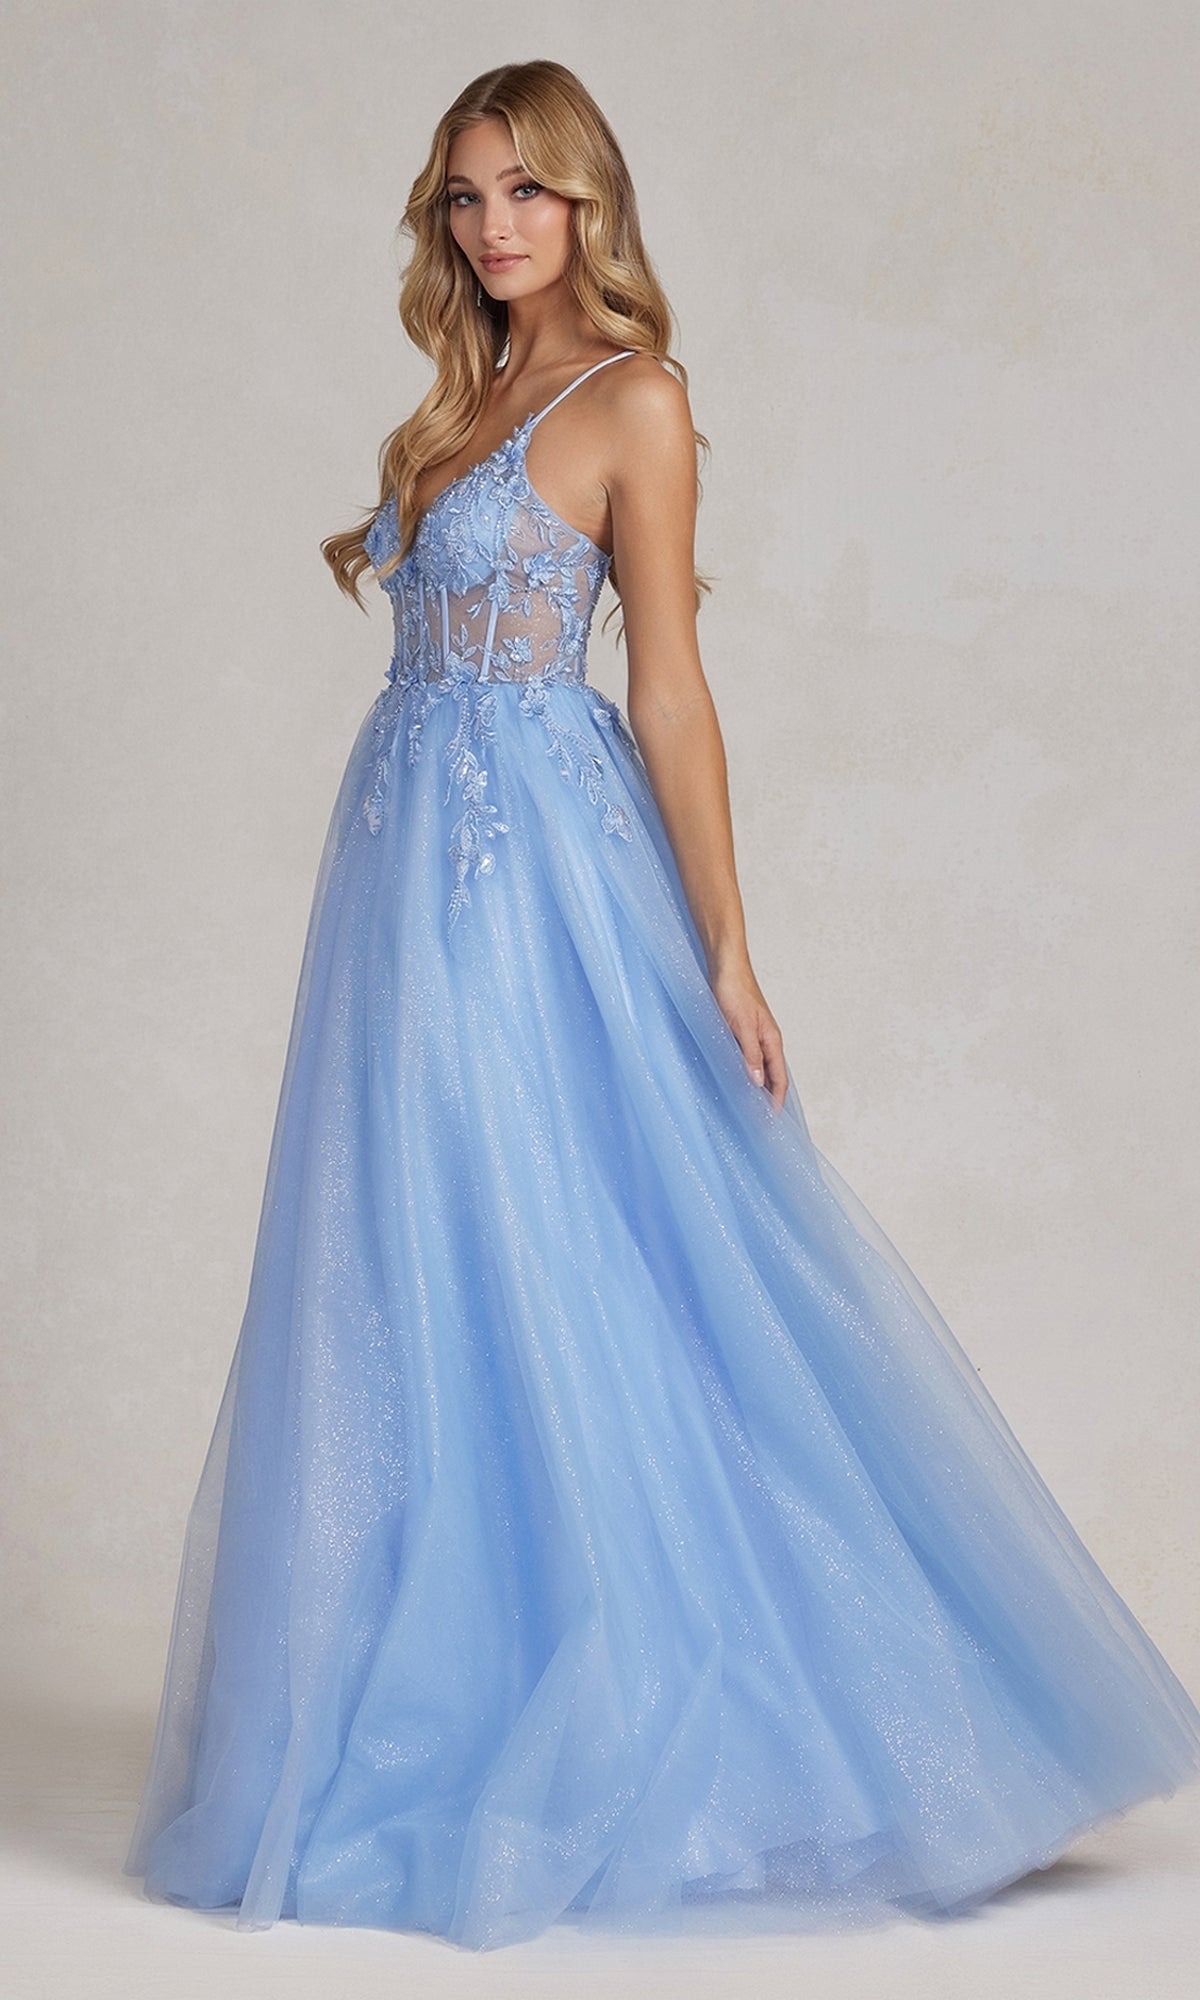  Sheer-Bodice A-Line Light Blue Long Prom Dress